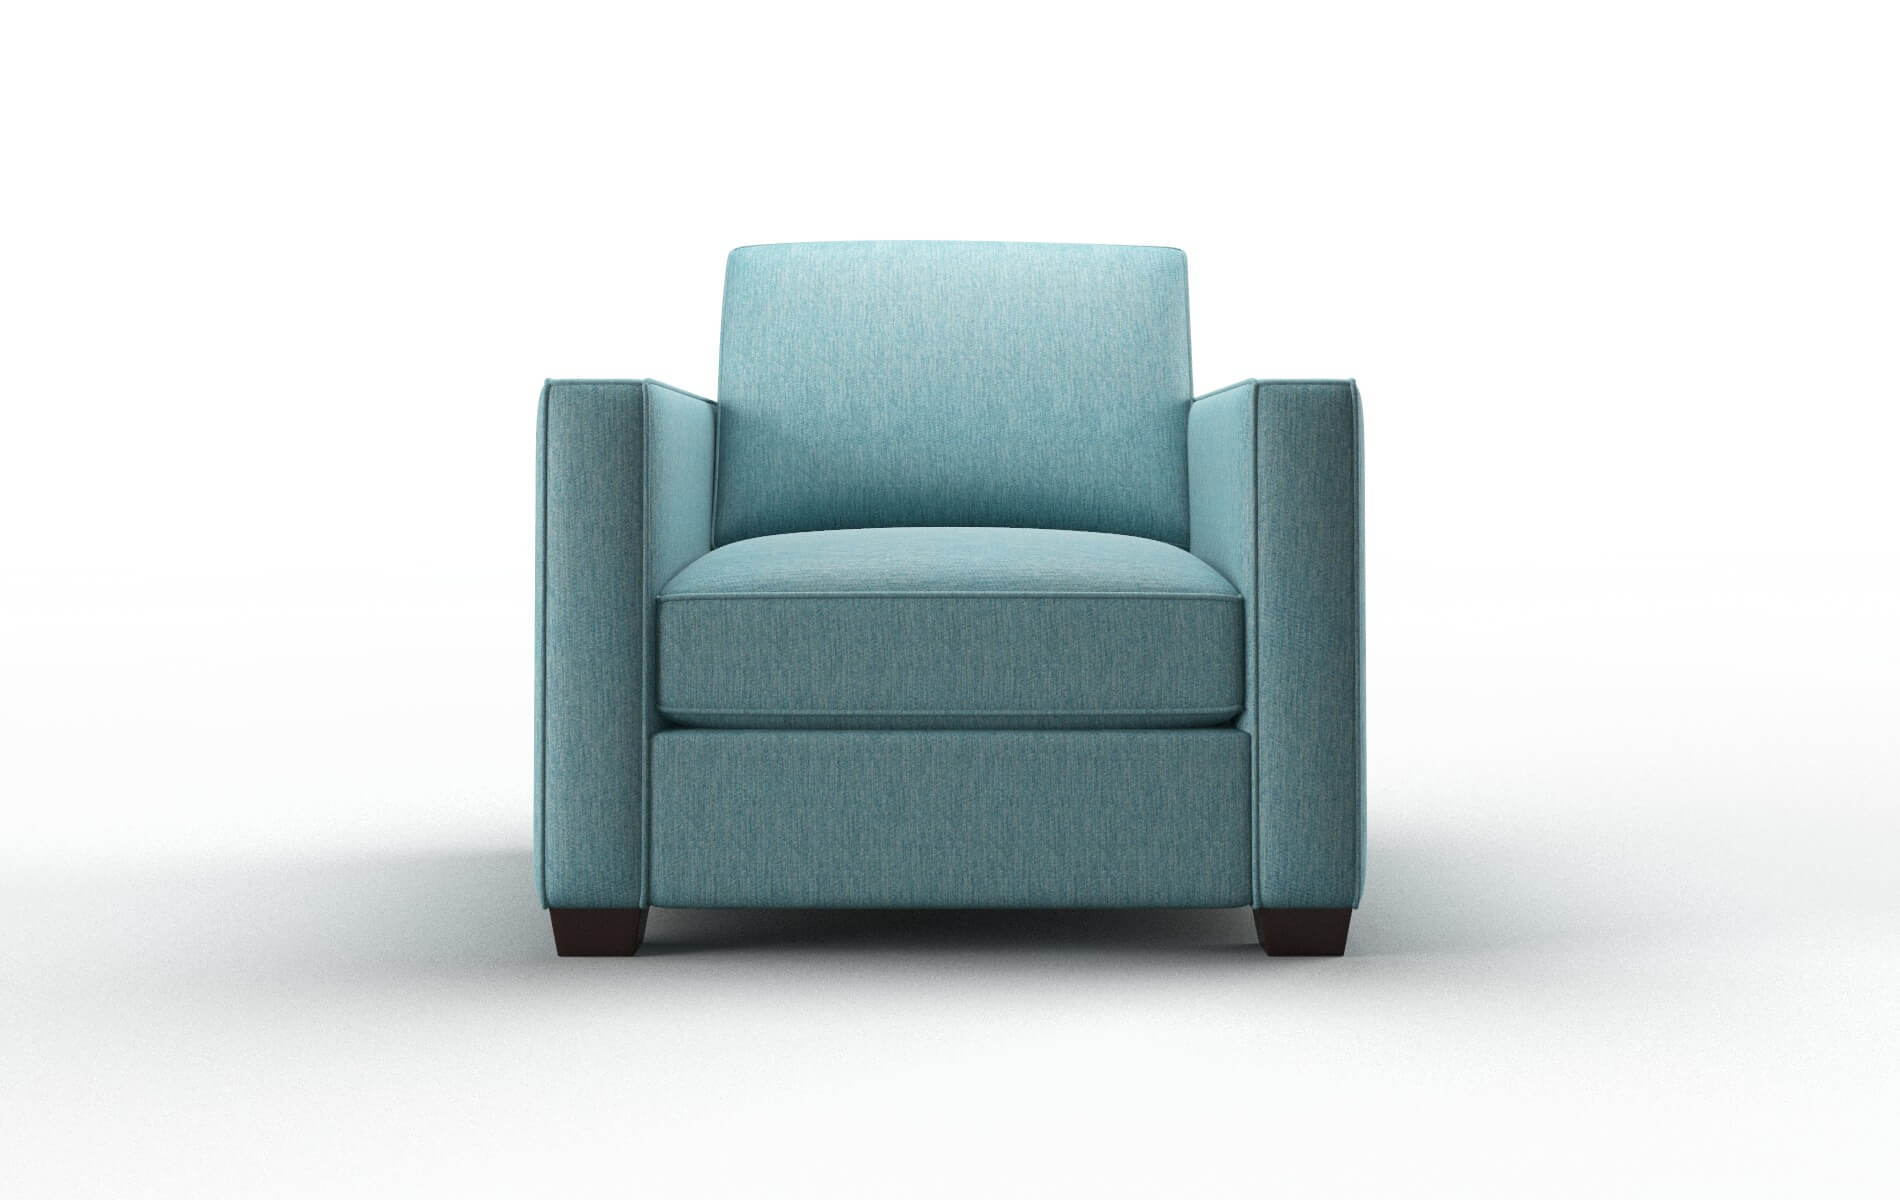 Calgary Cosmo Turquoise Chair espresso legs 1